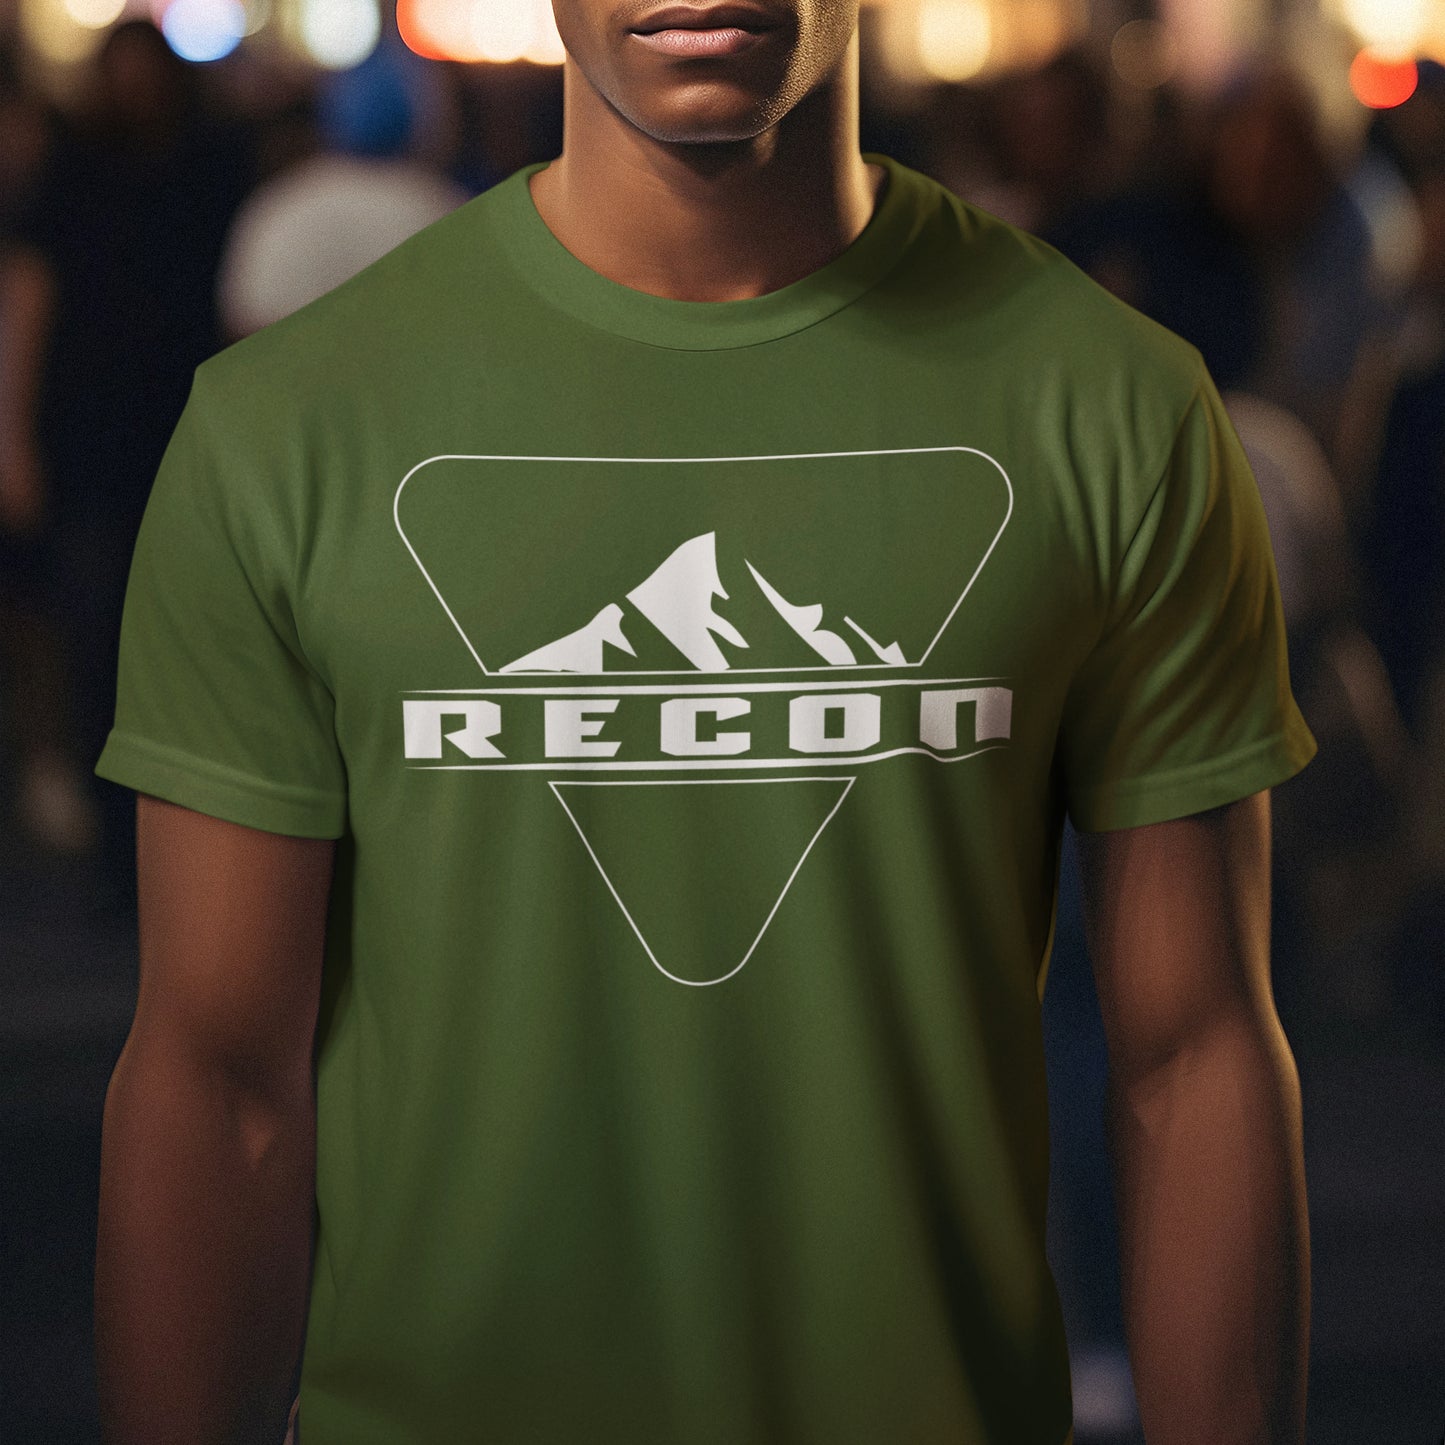 Recon T shirt - Classic